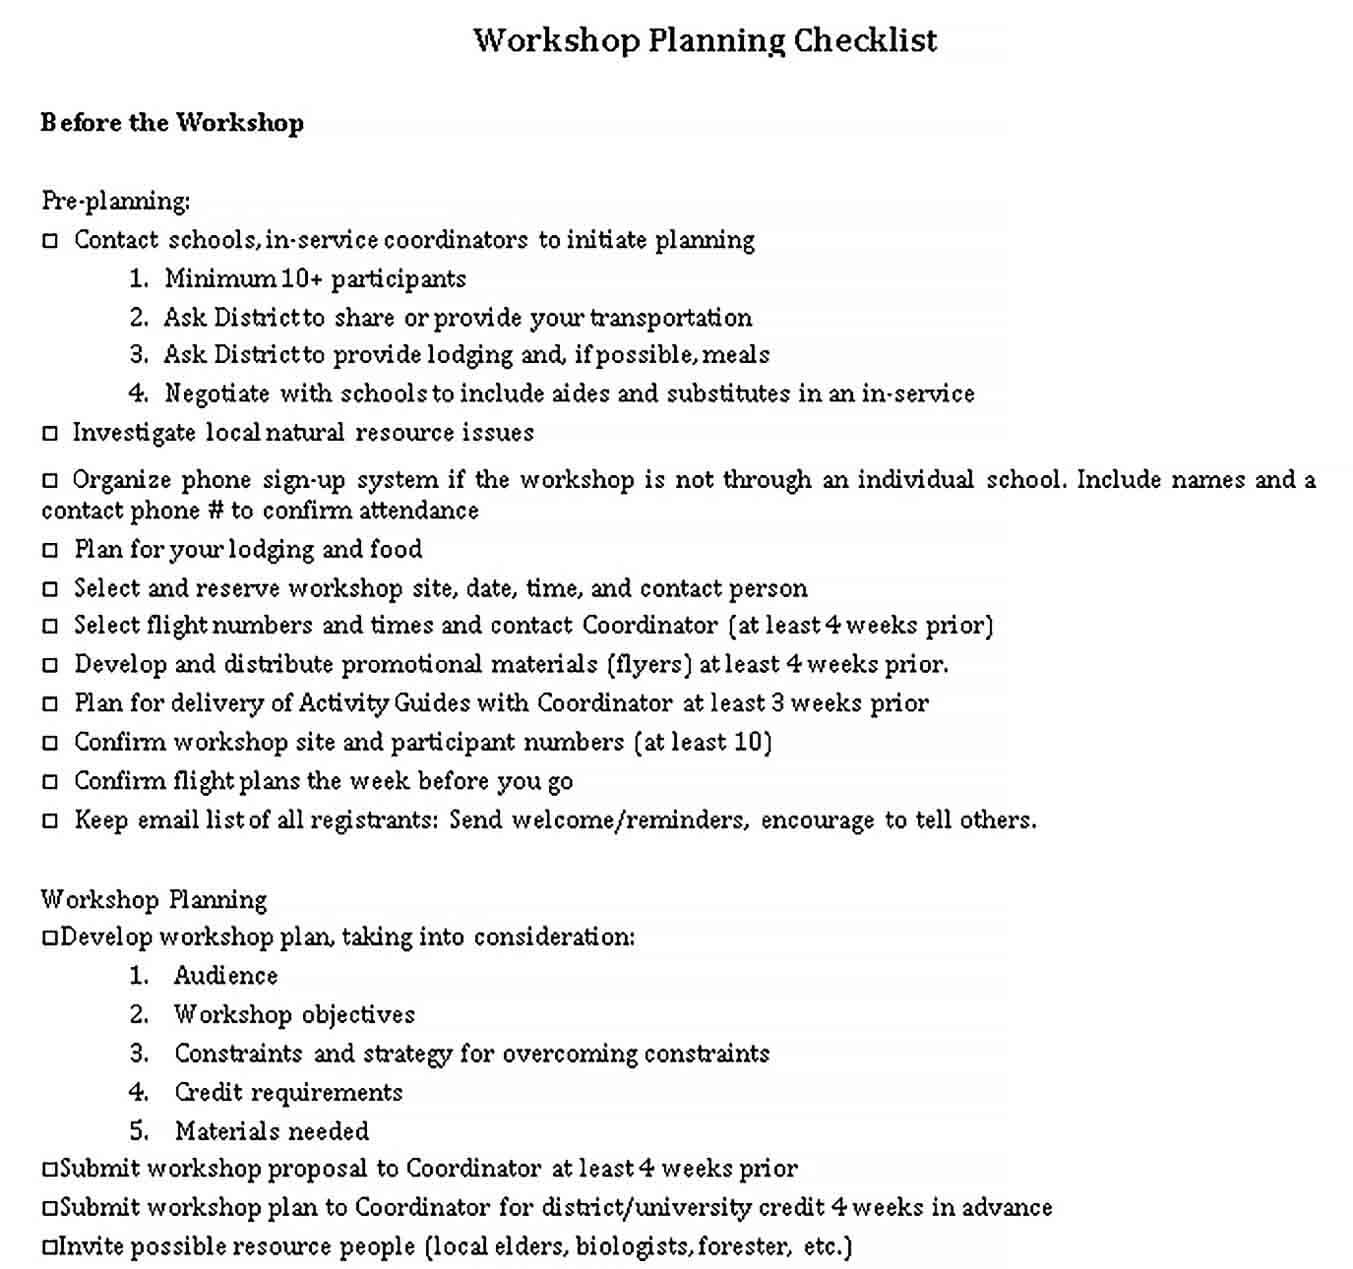 Sample Daily Workshop Planning Checklist Sample